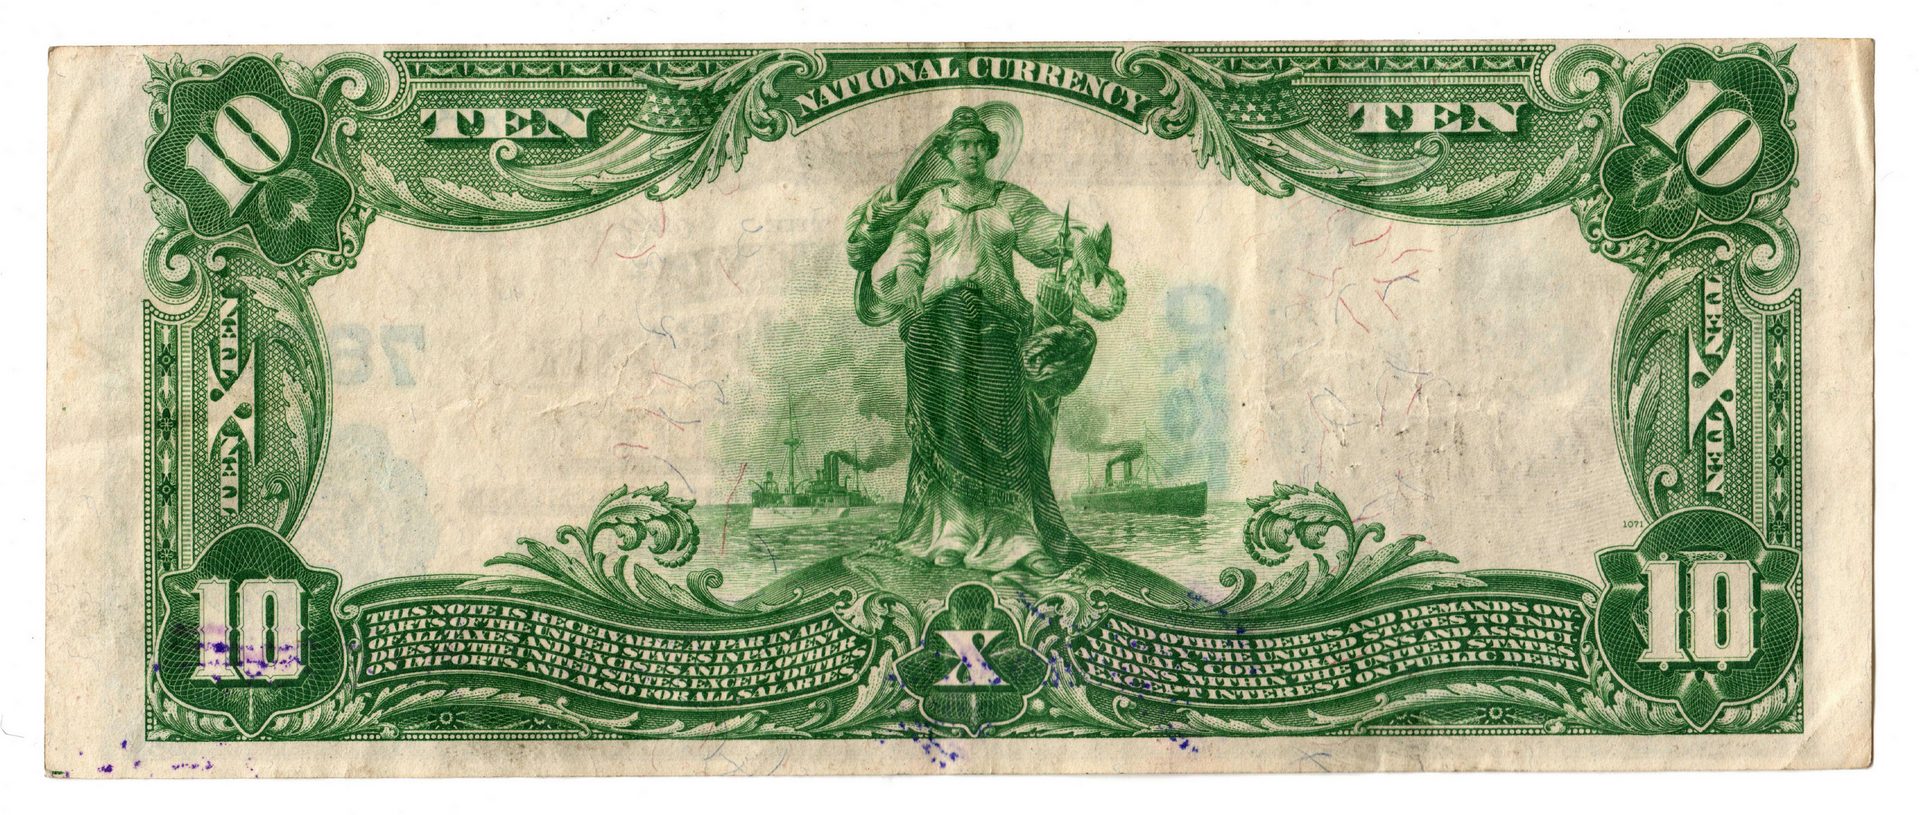 Lot 70: 1902 $10 Phoenix National Bank of Columbia Nationa